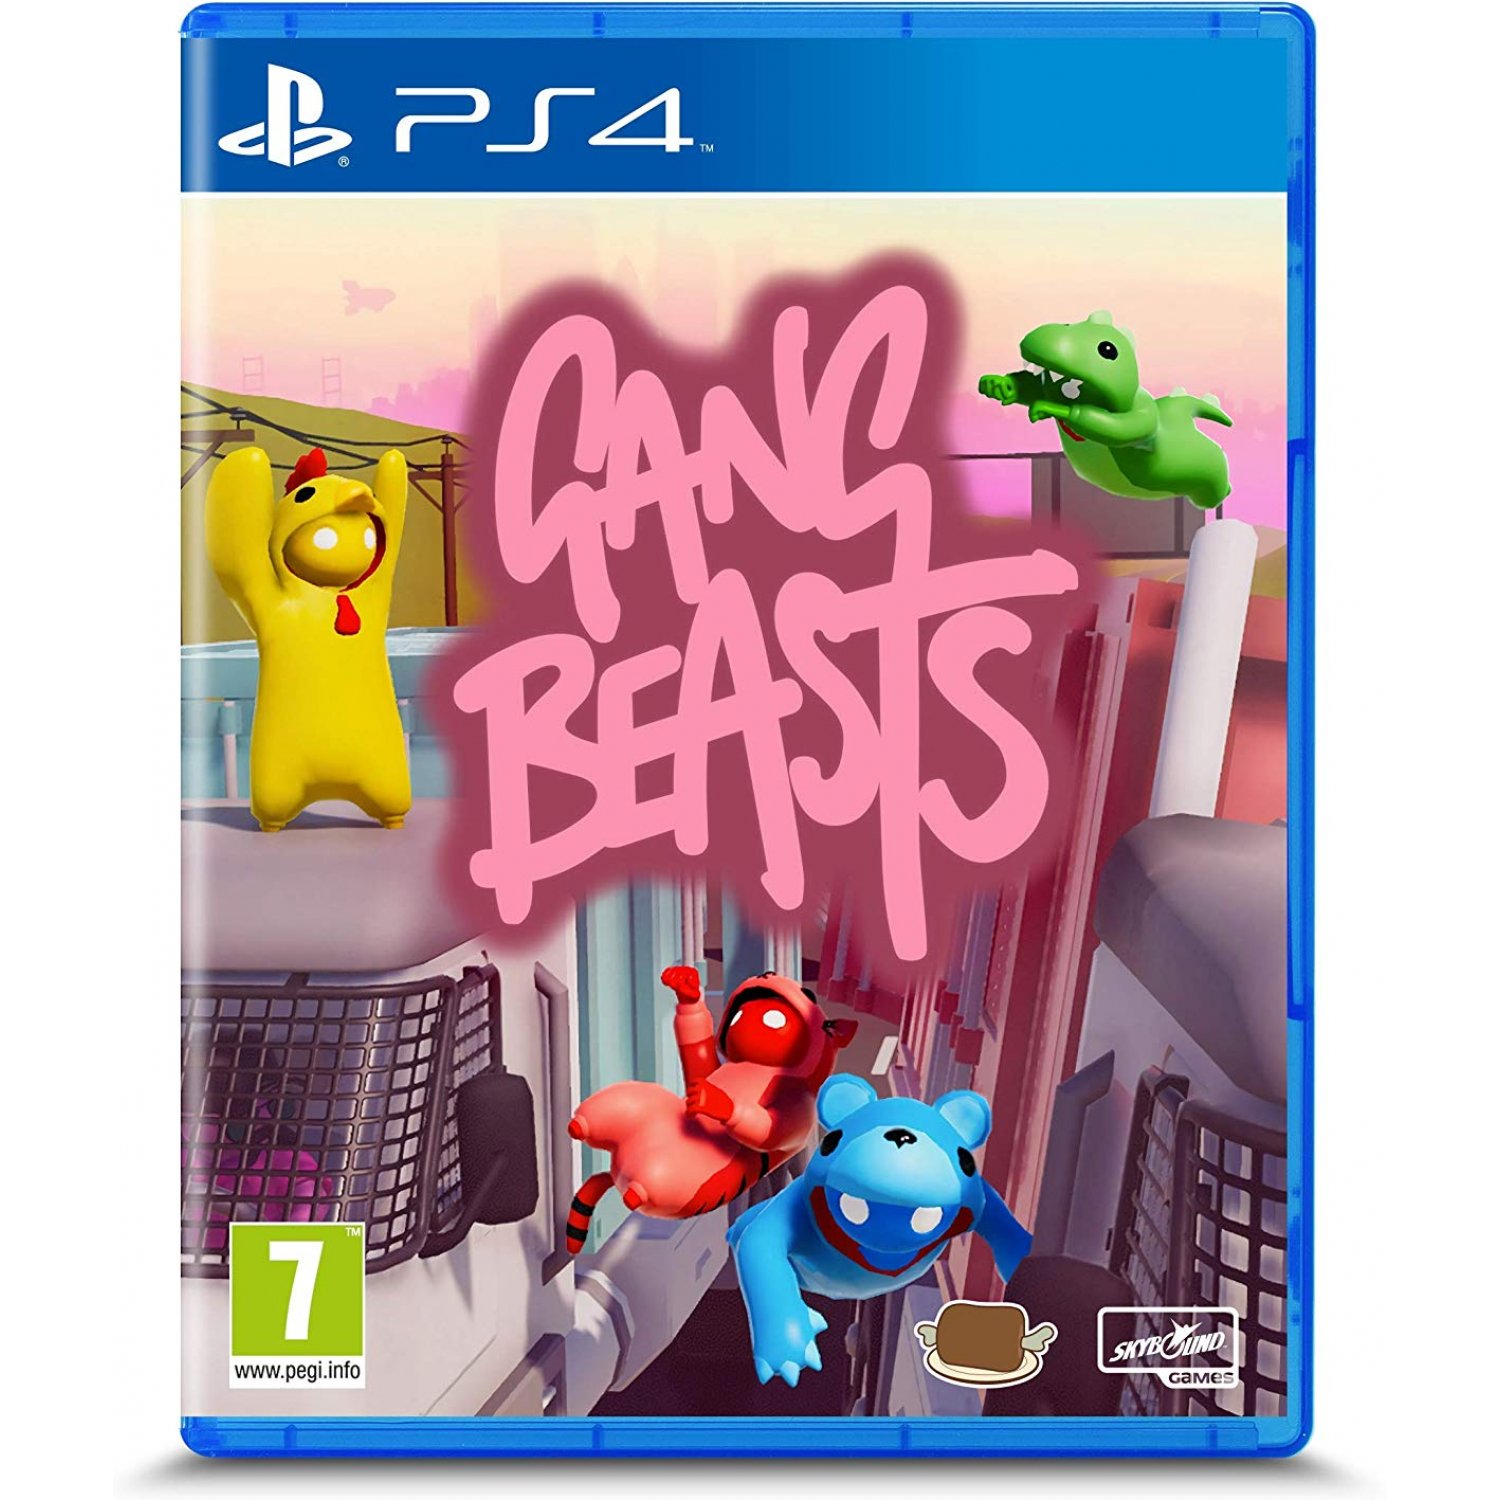 download gang beasts 2